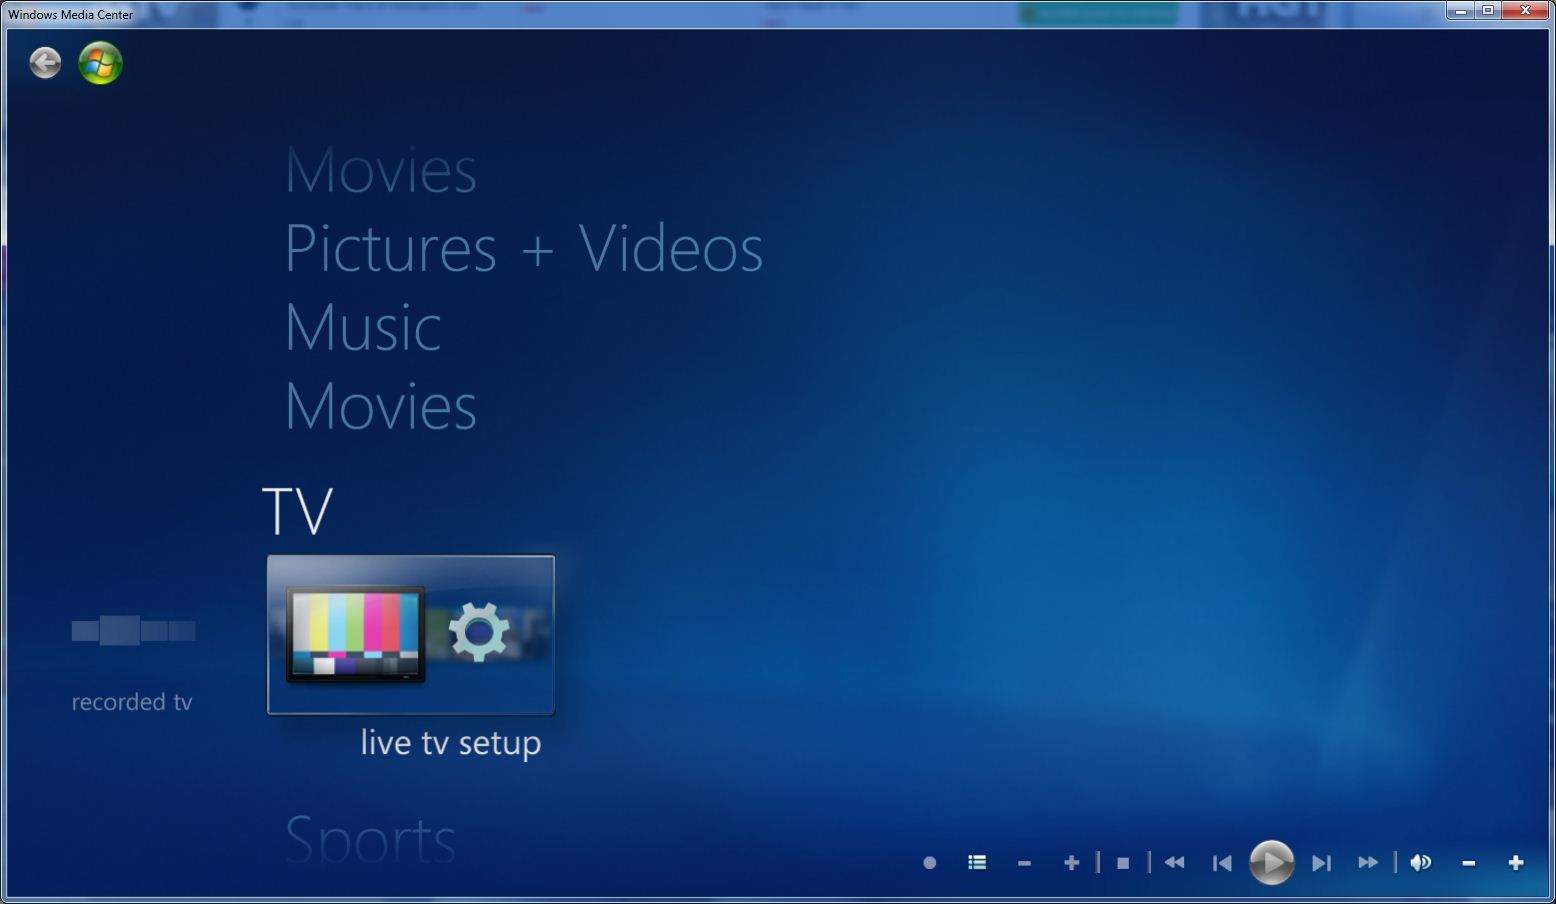 live tv on Windows media center in Windows 8